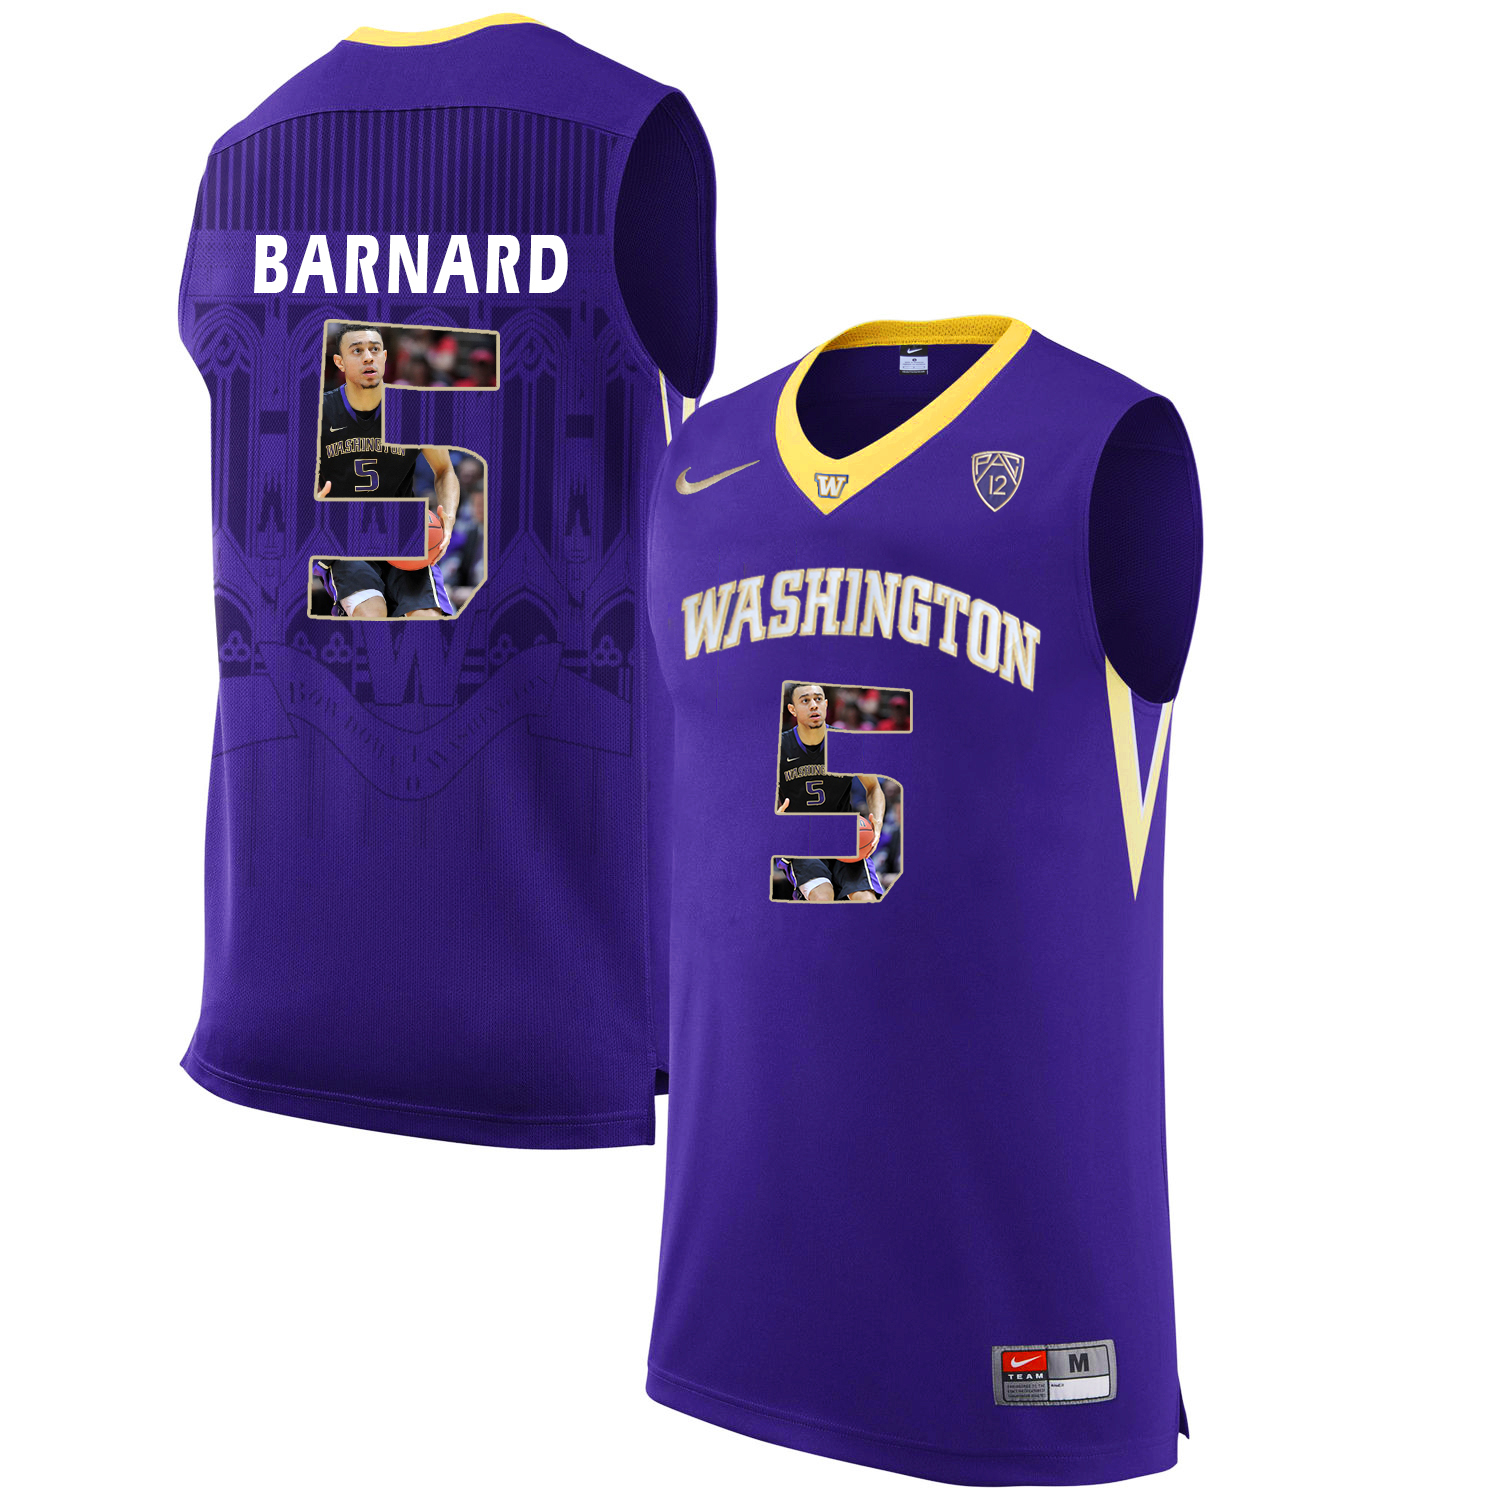 Washington Huskies 5 Quin Barnard Purple With Portait College Basketball Jersey